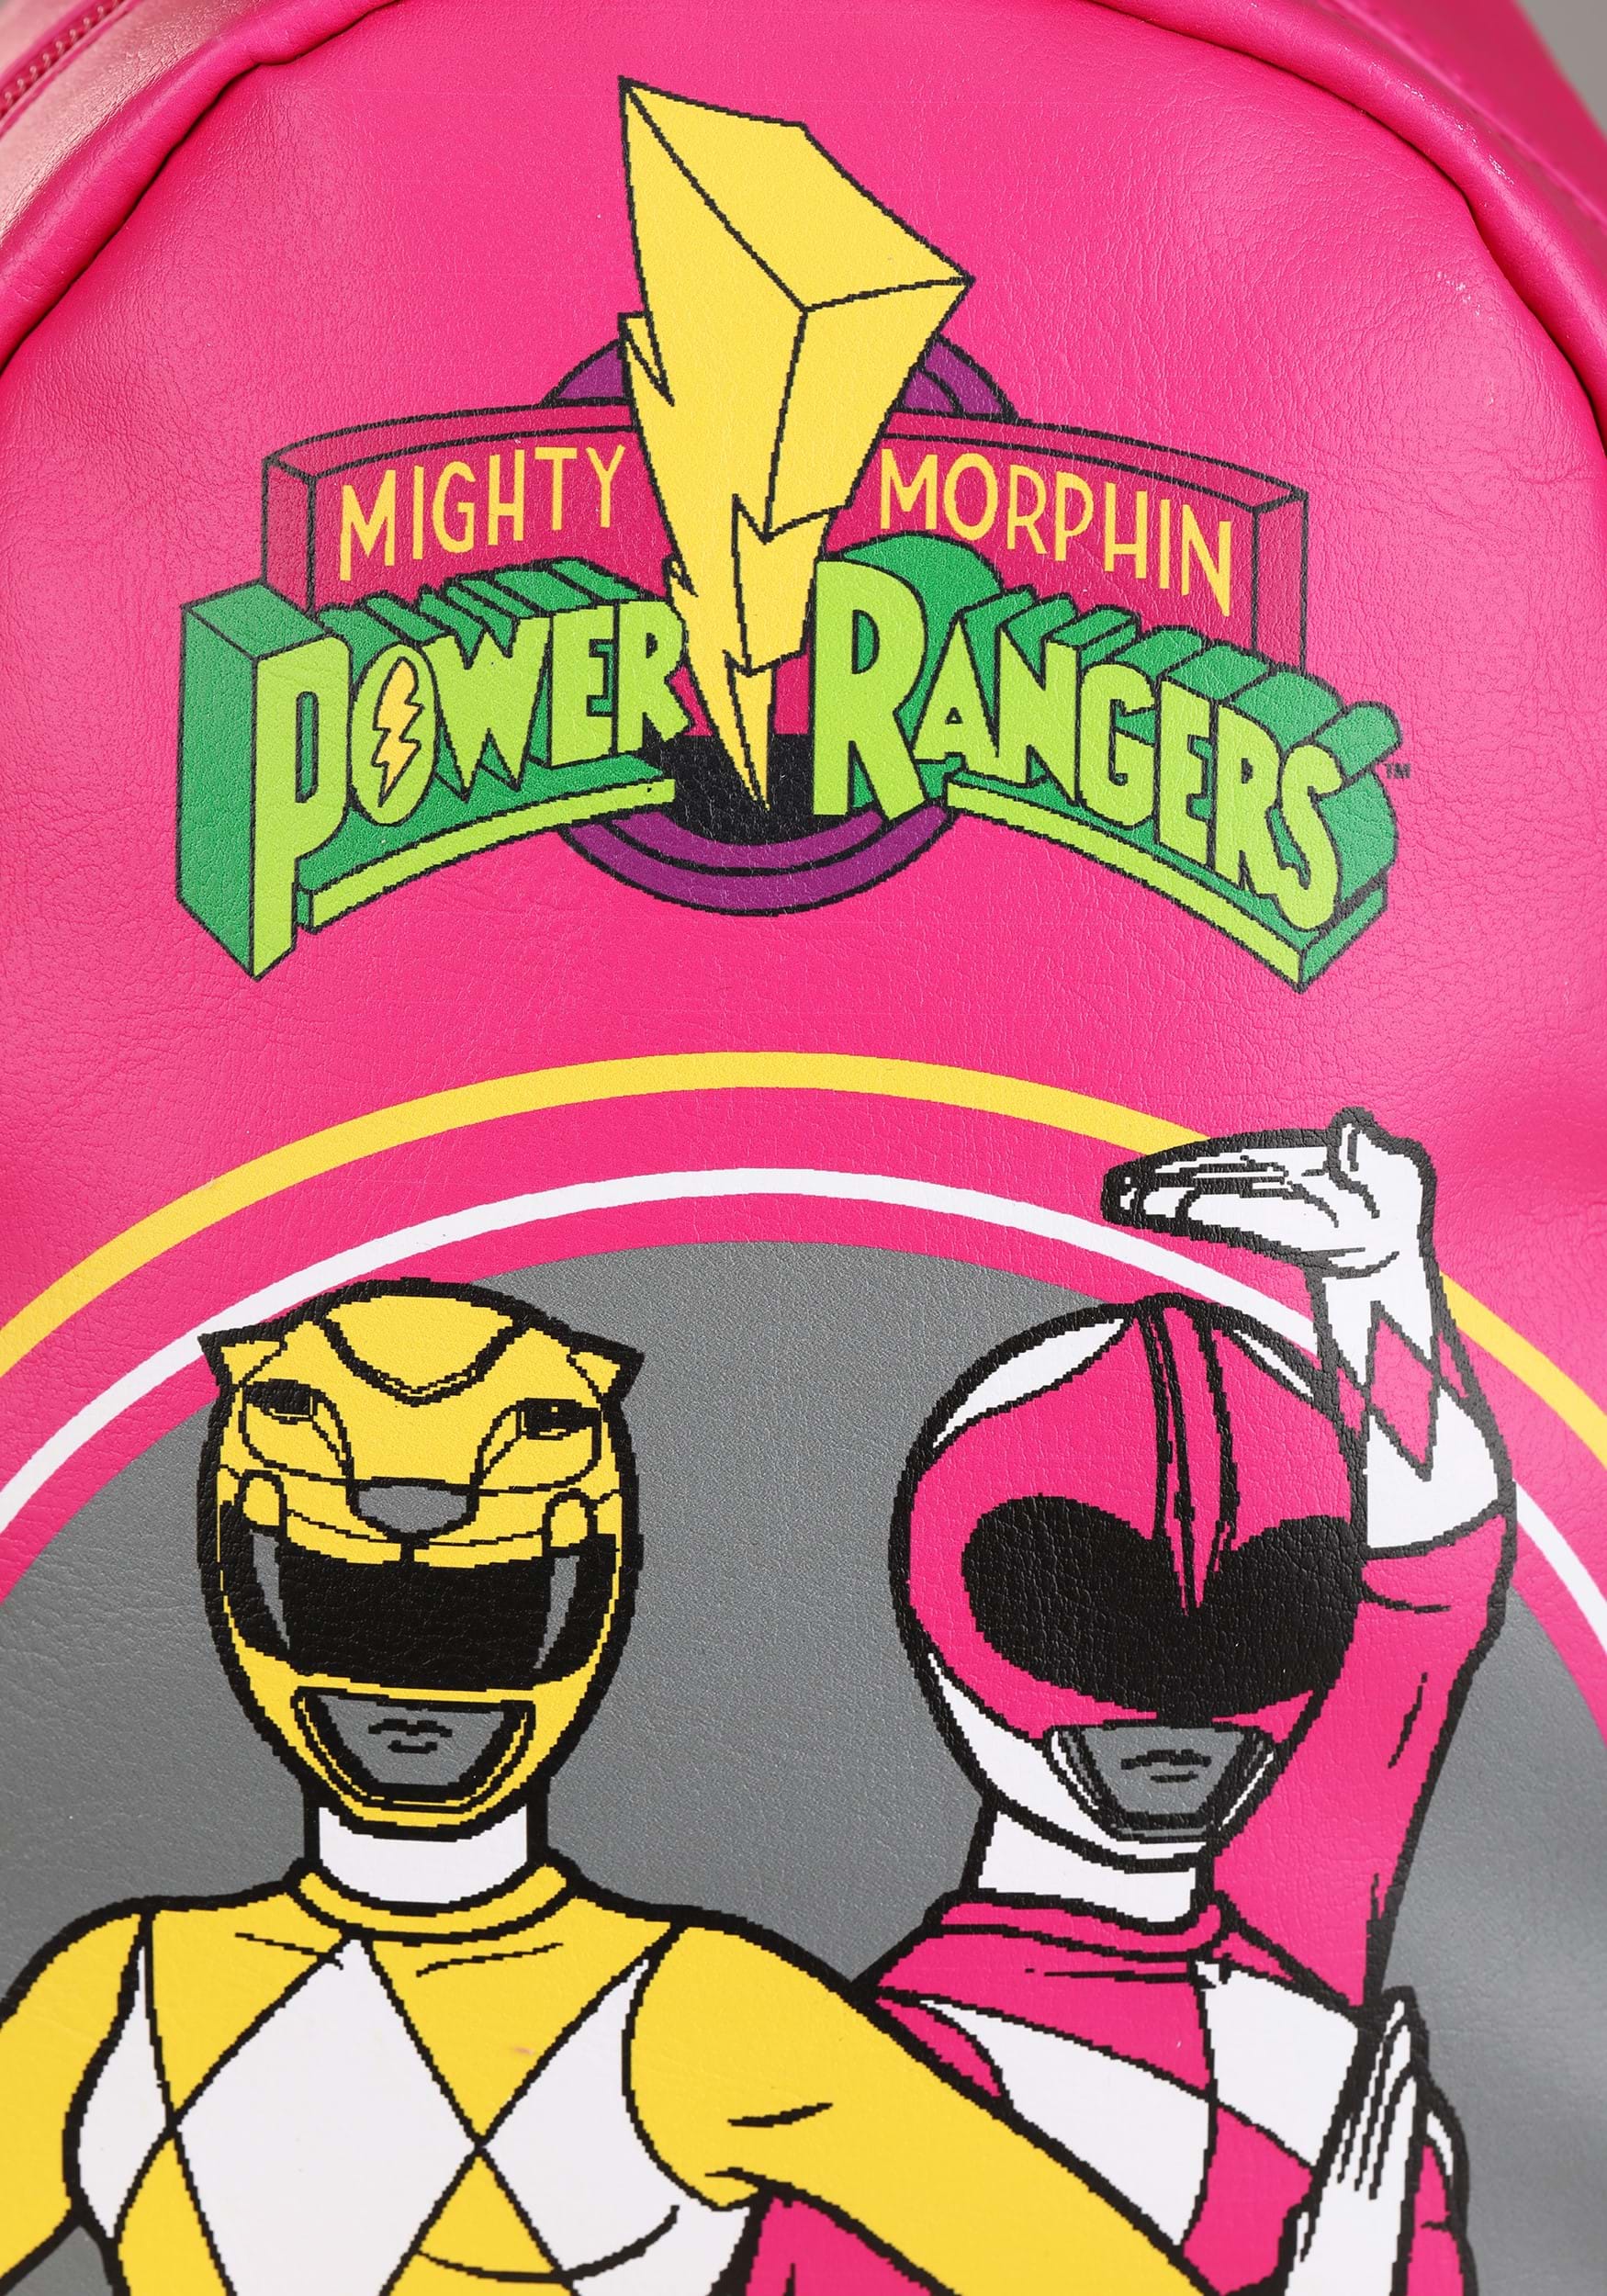 Buy Mighty Morphin Power Rangers Mini Backpack at Funko.